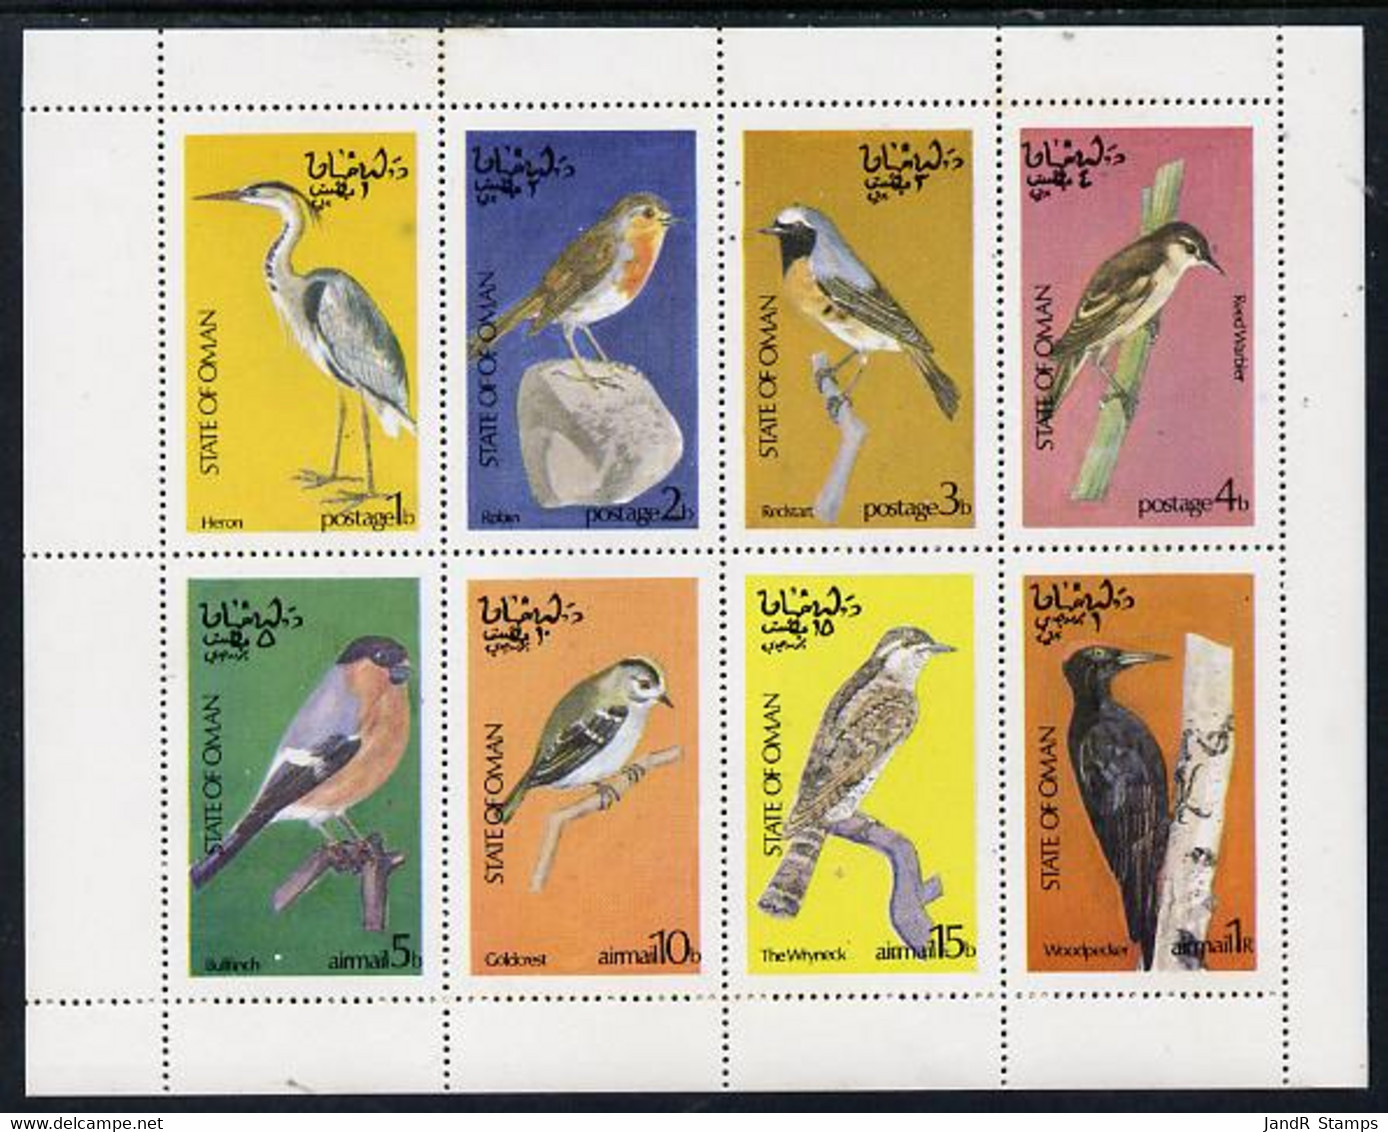 Oman 1977 Birds #1 (Heron, Robin, Woodpecker Etc) Perf  Set Of 8 Values (1b To 1R) MNH - Oman